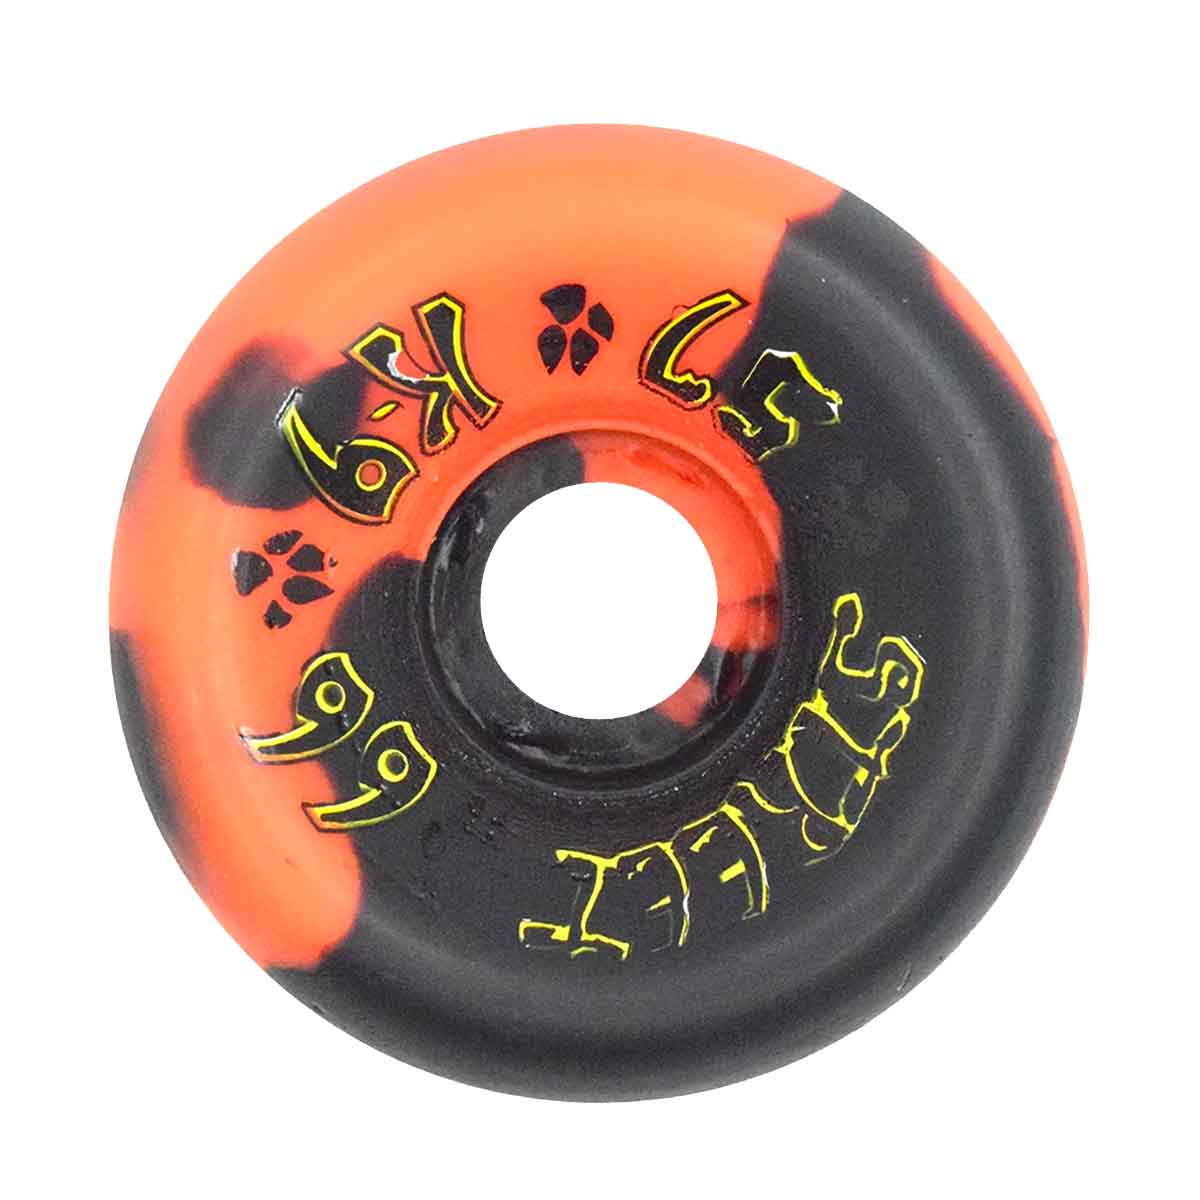 Dogtown K-9 Street Skateboard - Orange/Black 57mm 99a | SoCal Skateshop